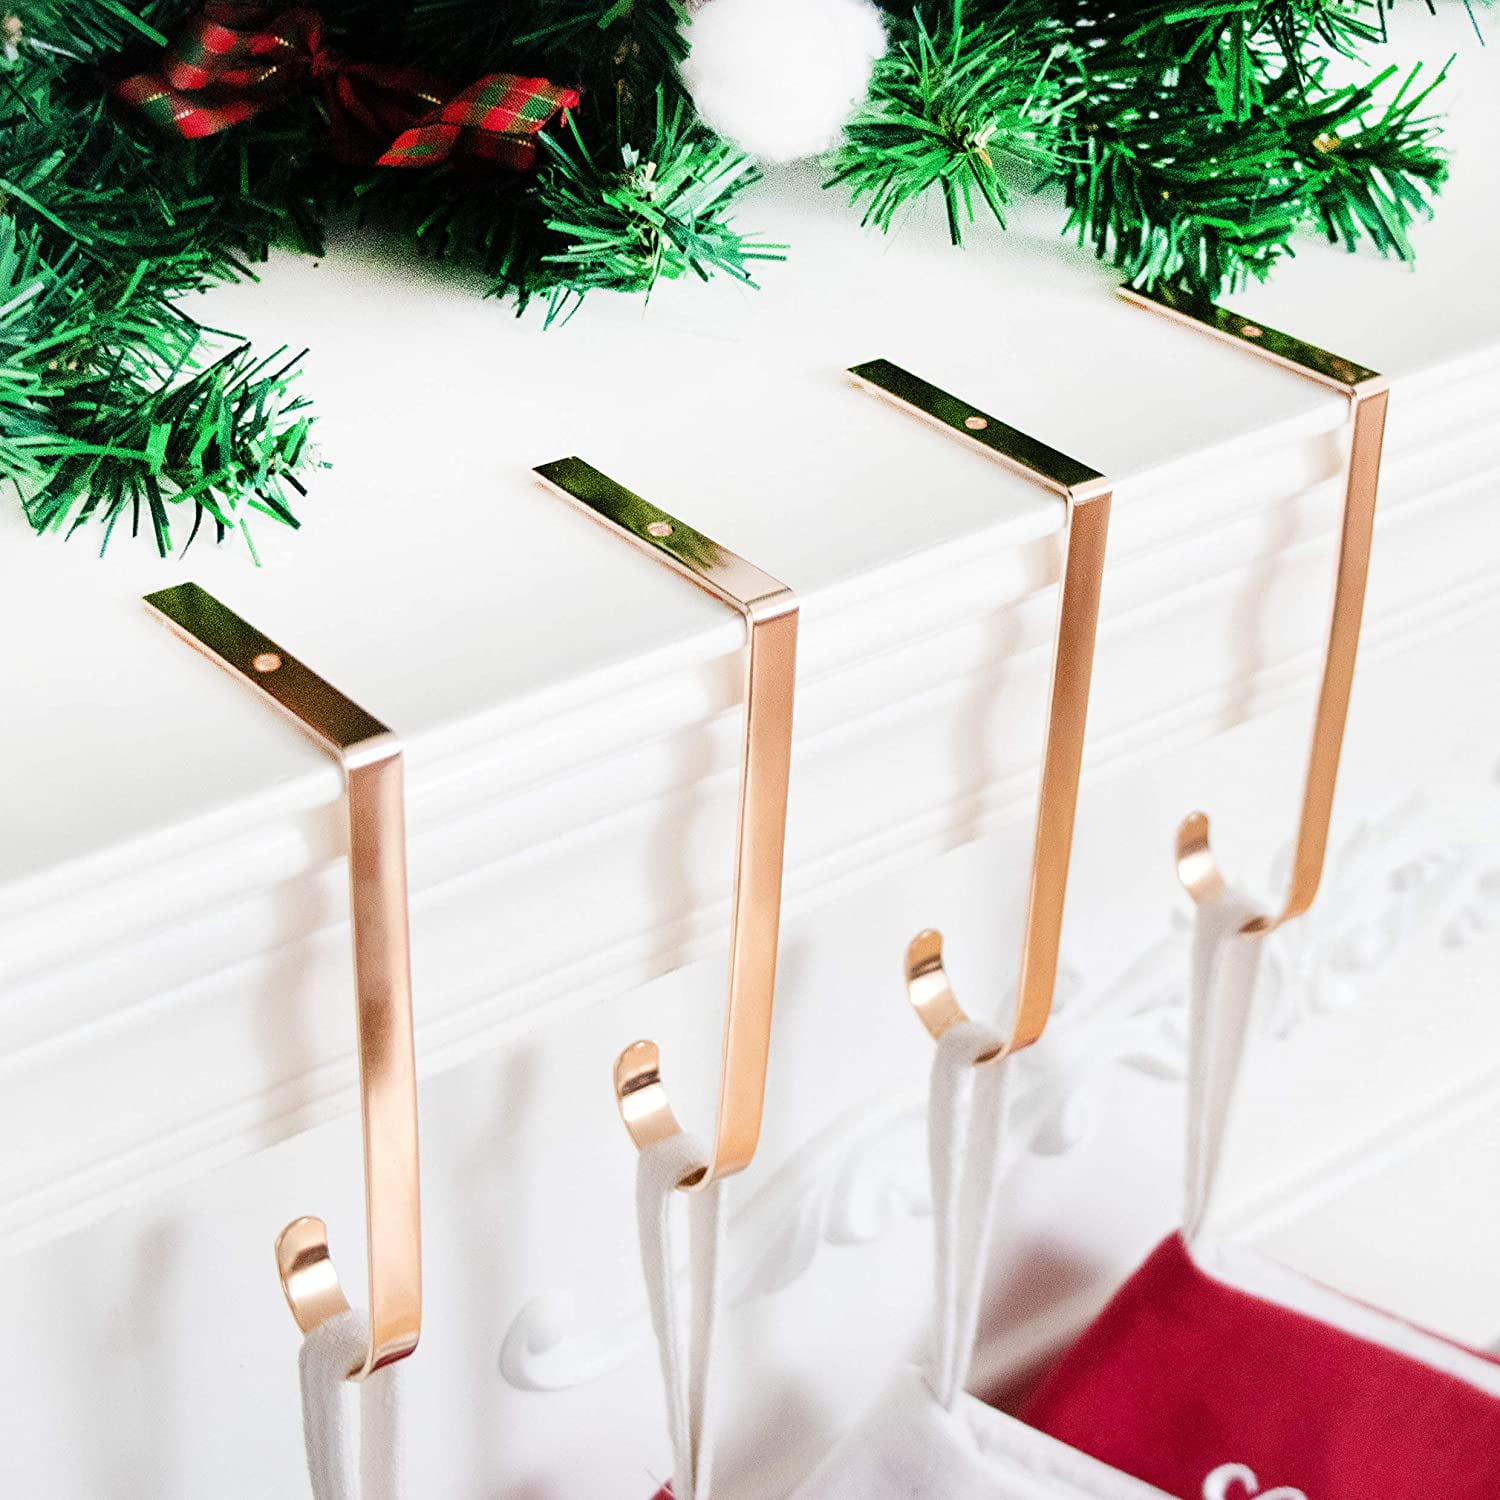 Details about   3pcs Christmas Stocking Holder Hanging Hooks Buckles Fireplace Mantel Hooks new 